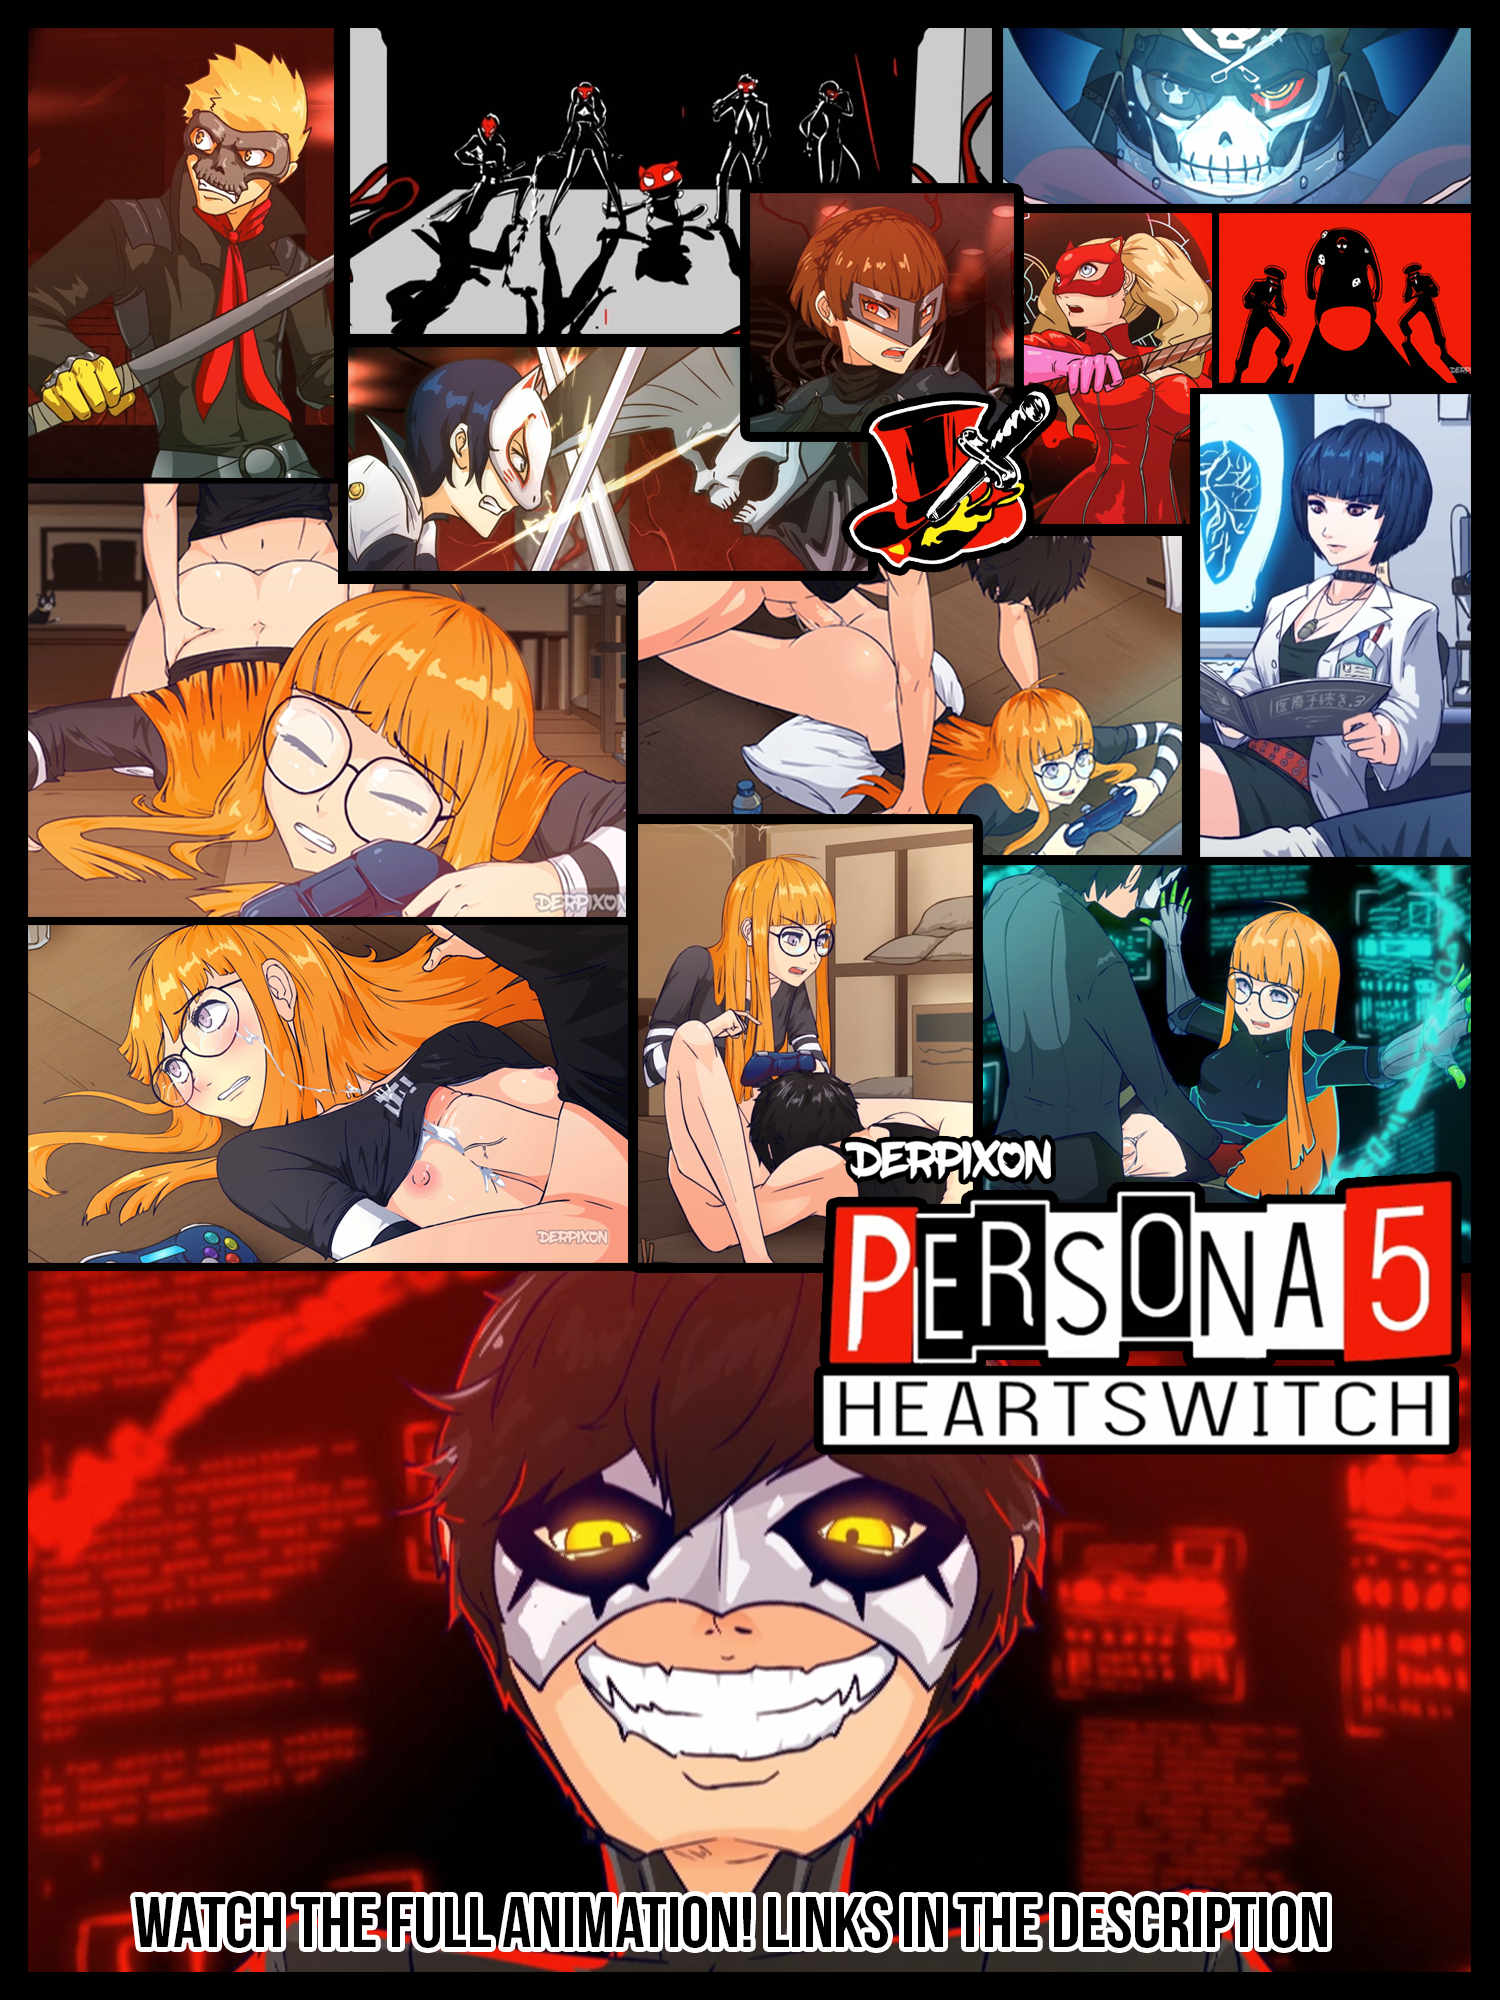 Persona 5 - HeartSwitch (RELEASED) Derpixon — November 11th, 2018